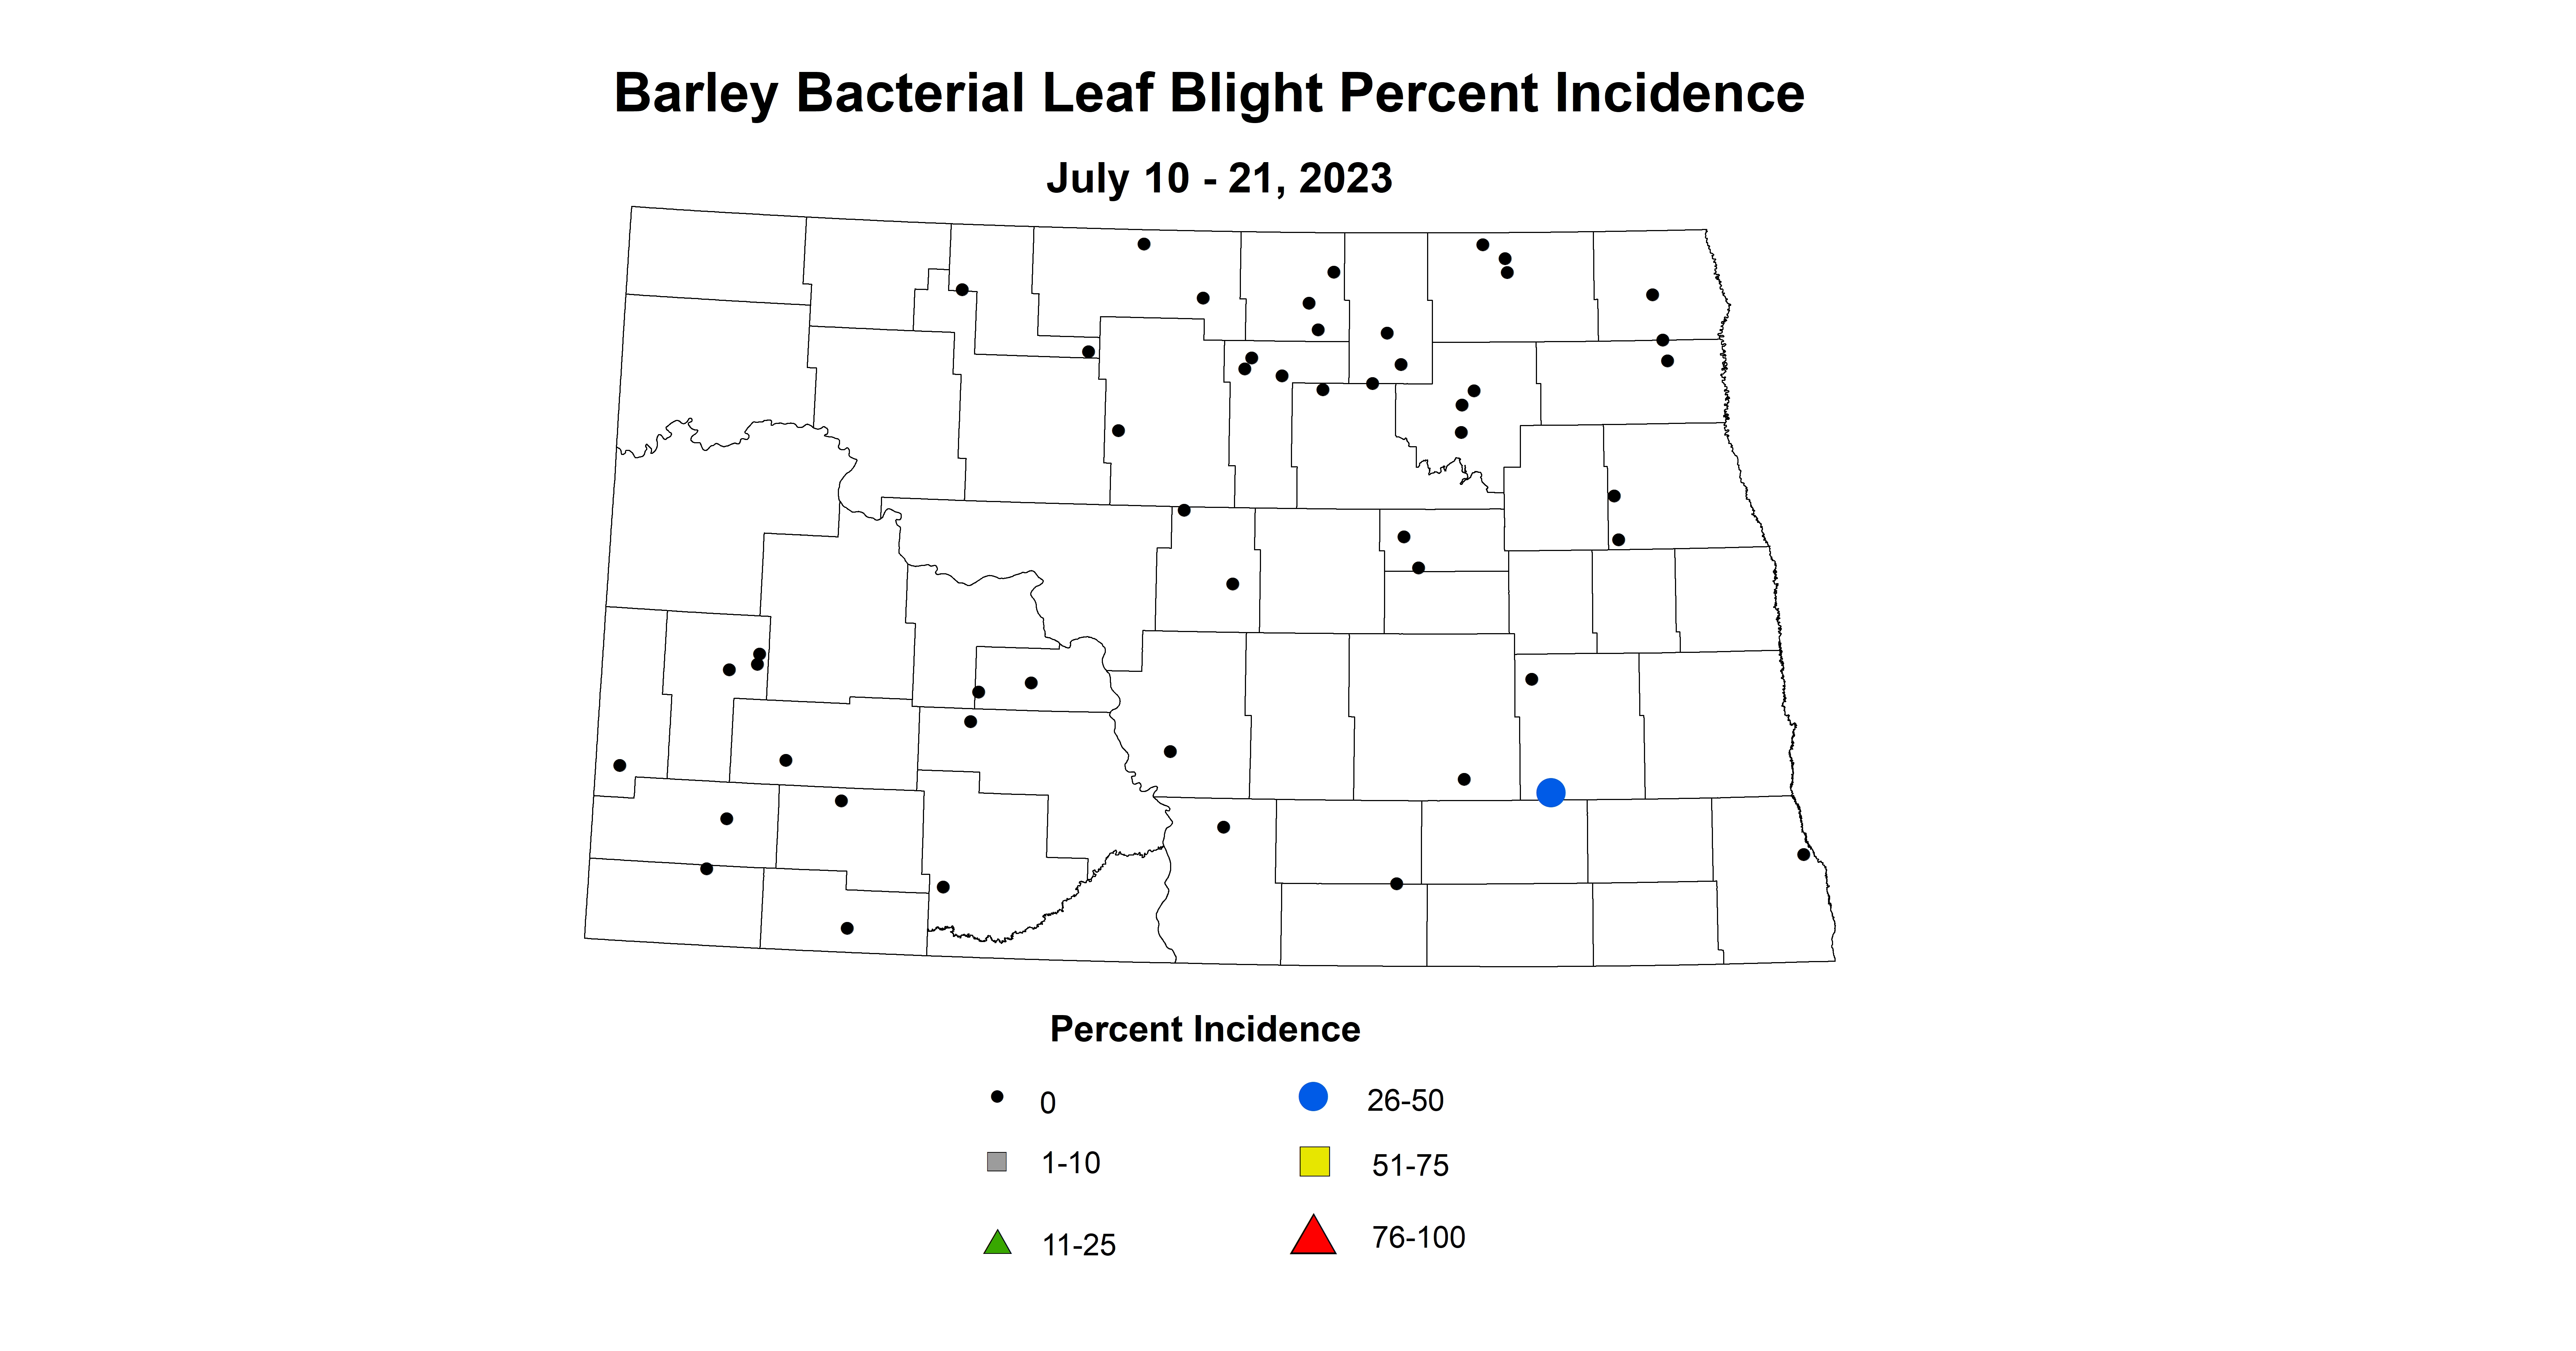 barley bacterial leaf blight percent incidence July 10-21 2023